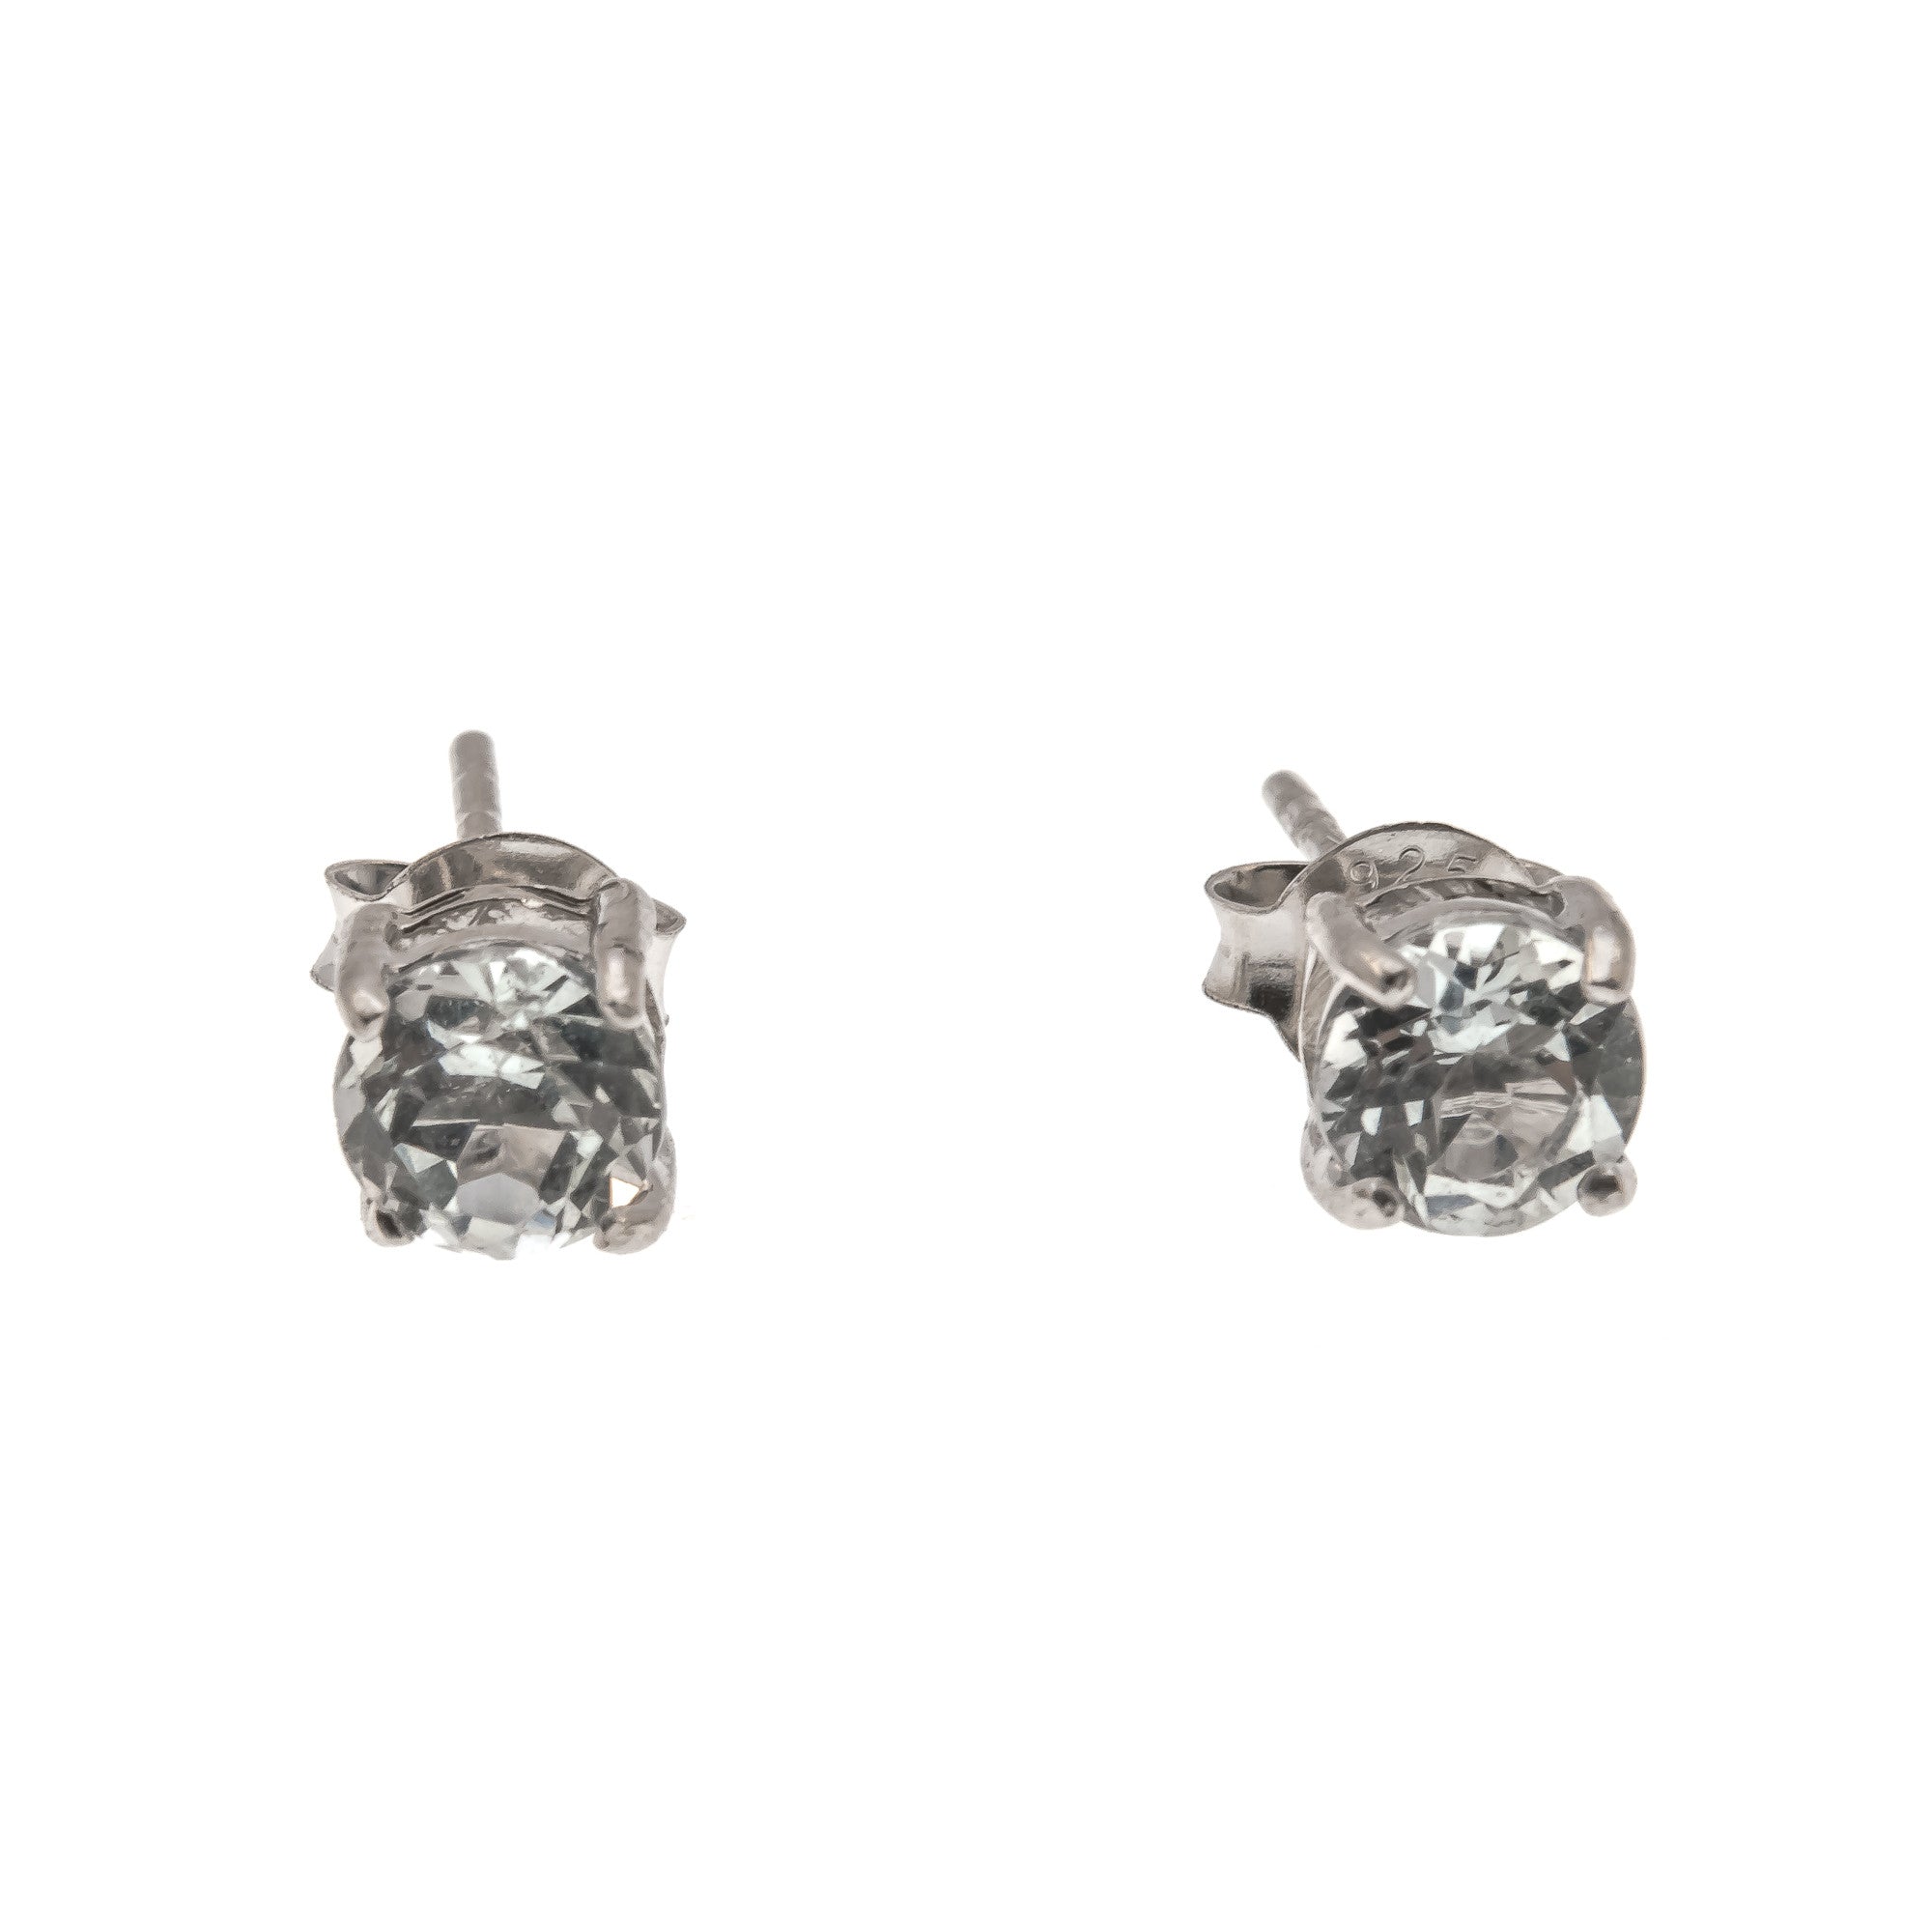 Water - Estate Sterling Silver White Topaz Stud Earrings  (EE070)